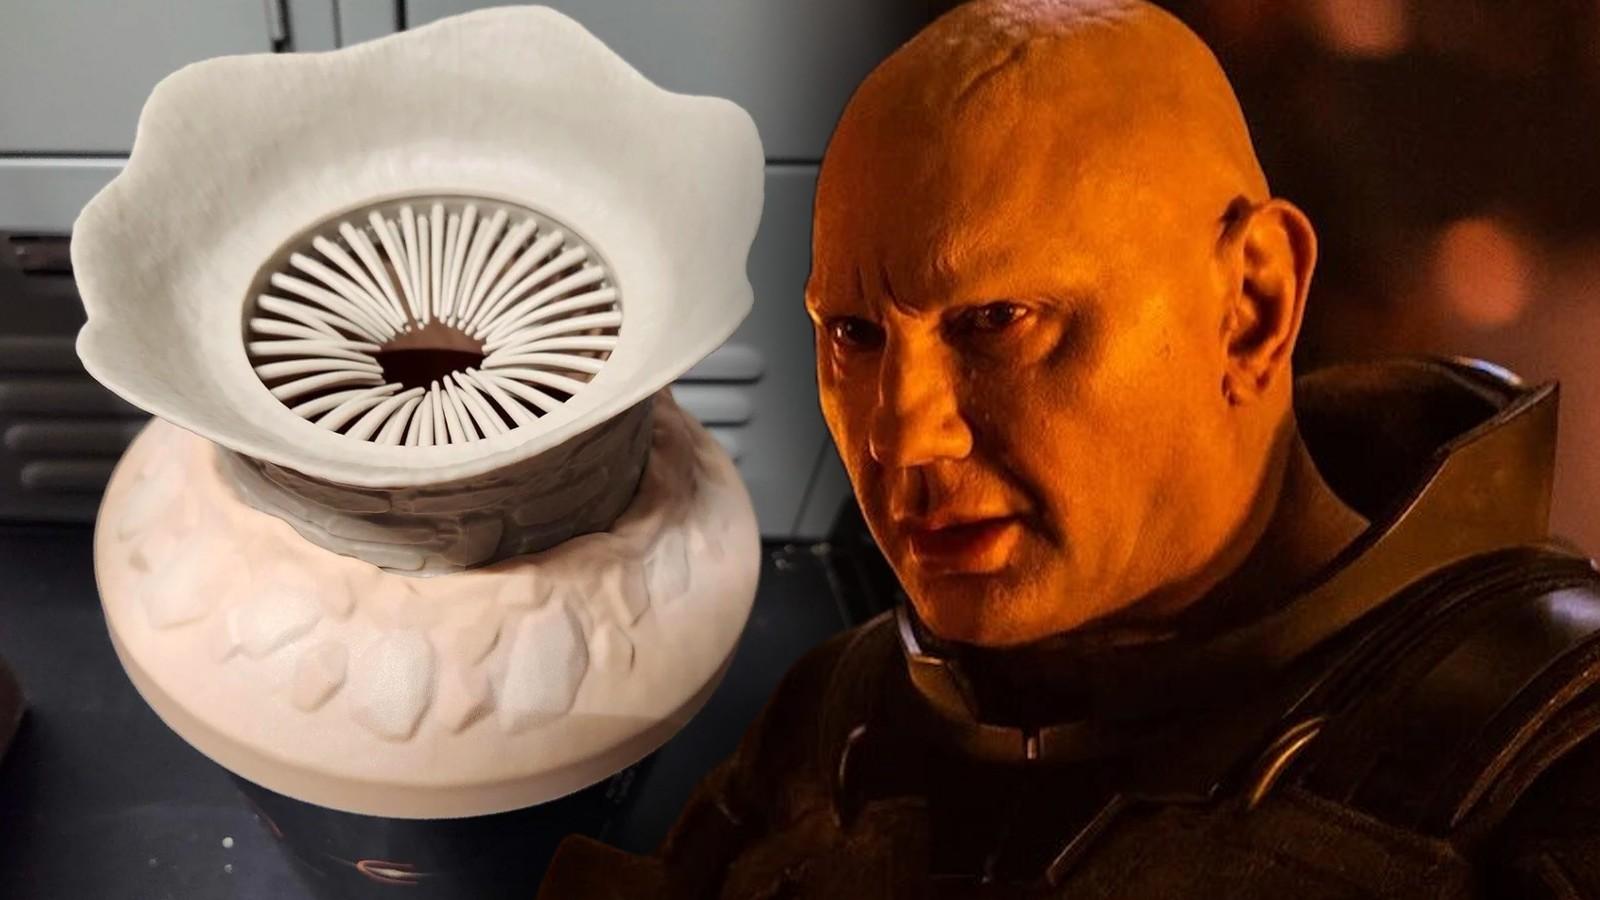 Dave Bautista in Dune 2 and the sandworm popcorn bucket